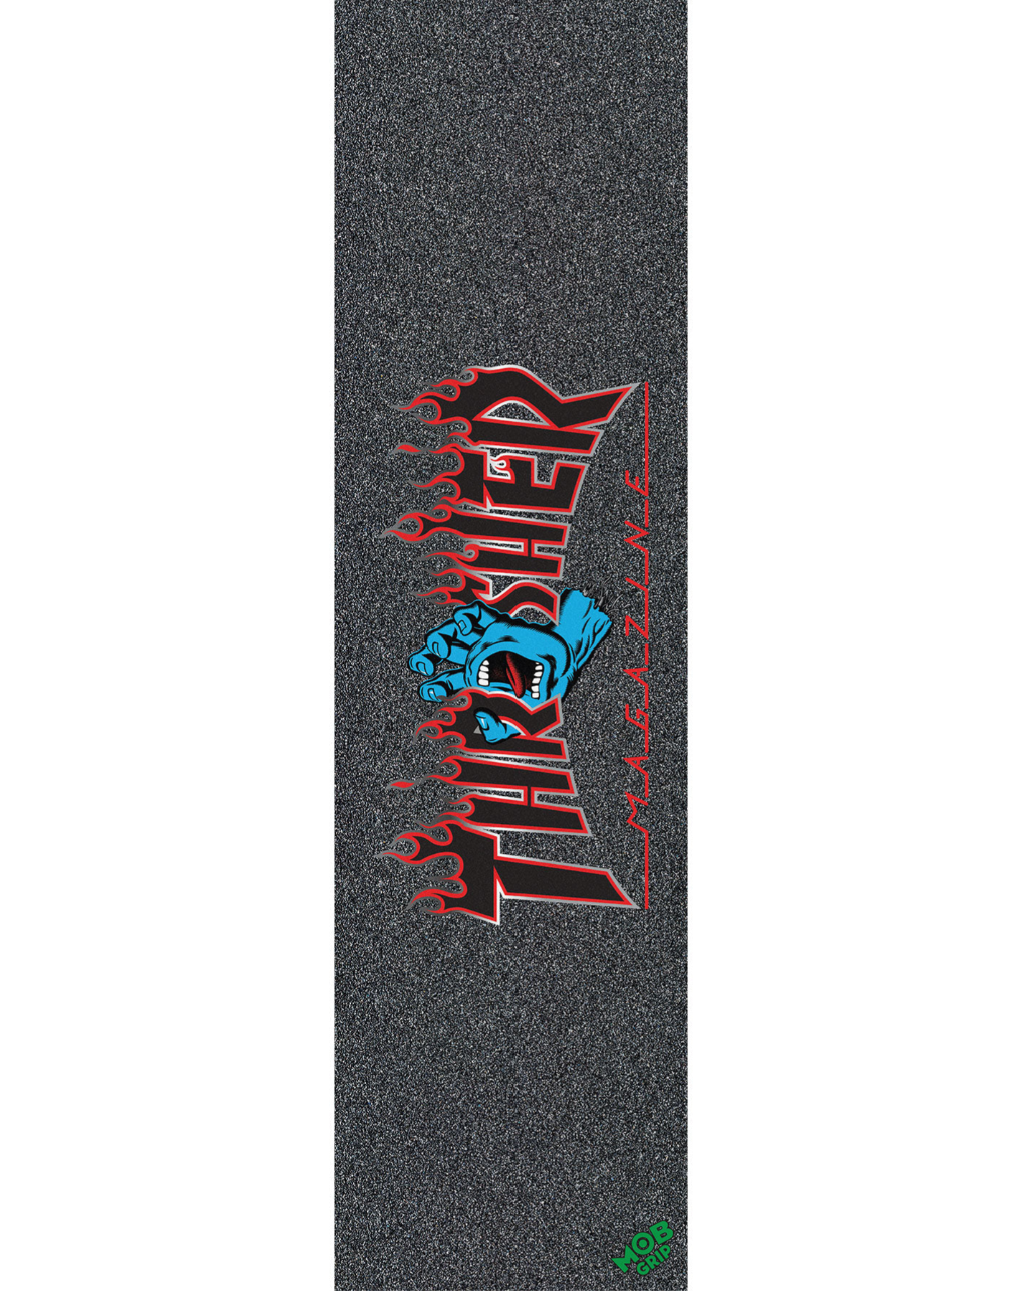 Mob Grip X Santa Cruz Skateboards X Thrasher Magazine Screaming Flame Logo single sheet grip tape.